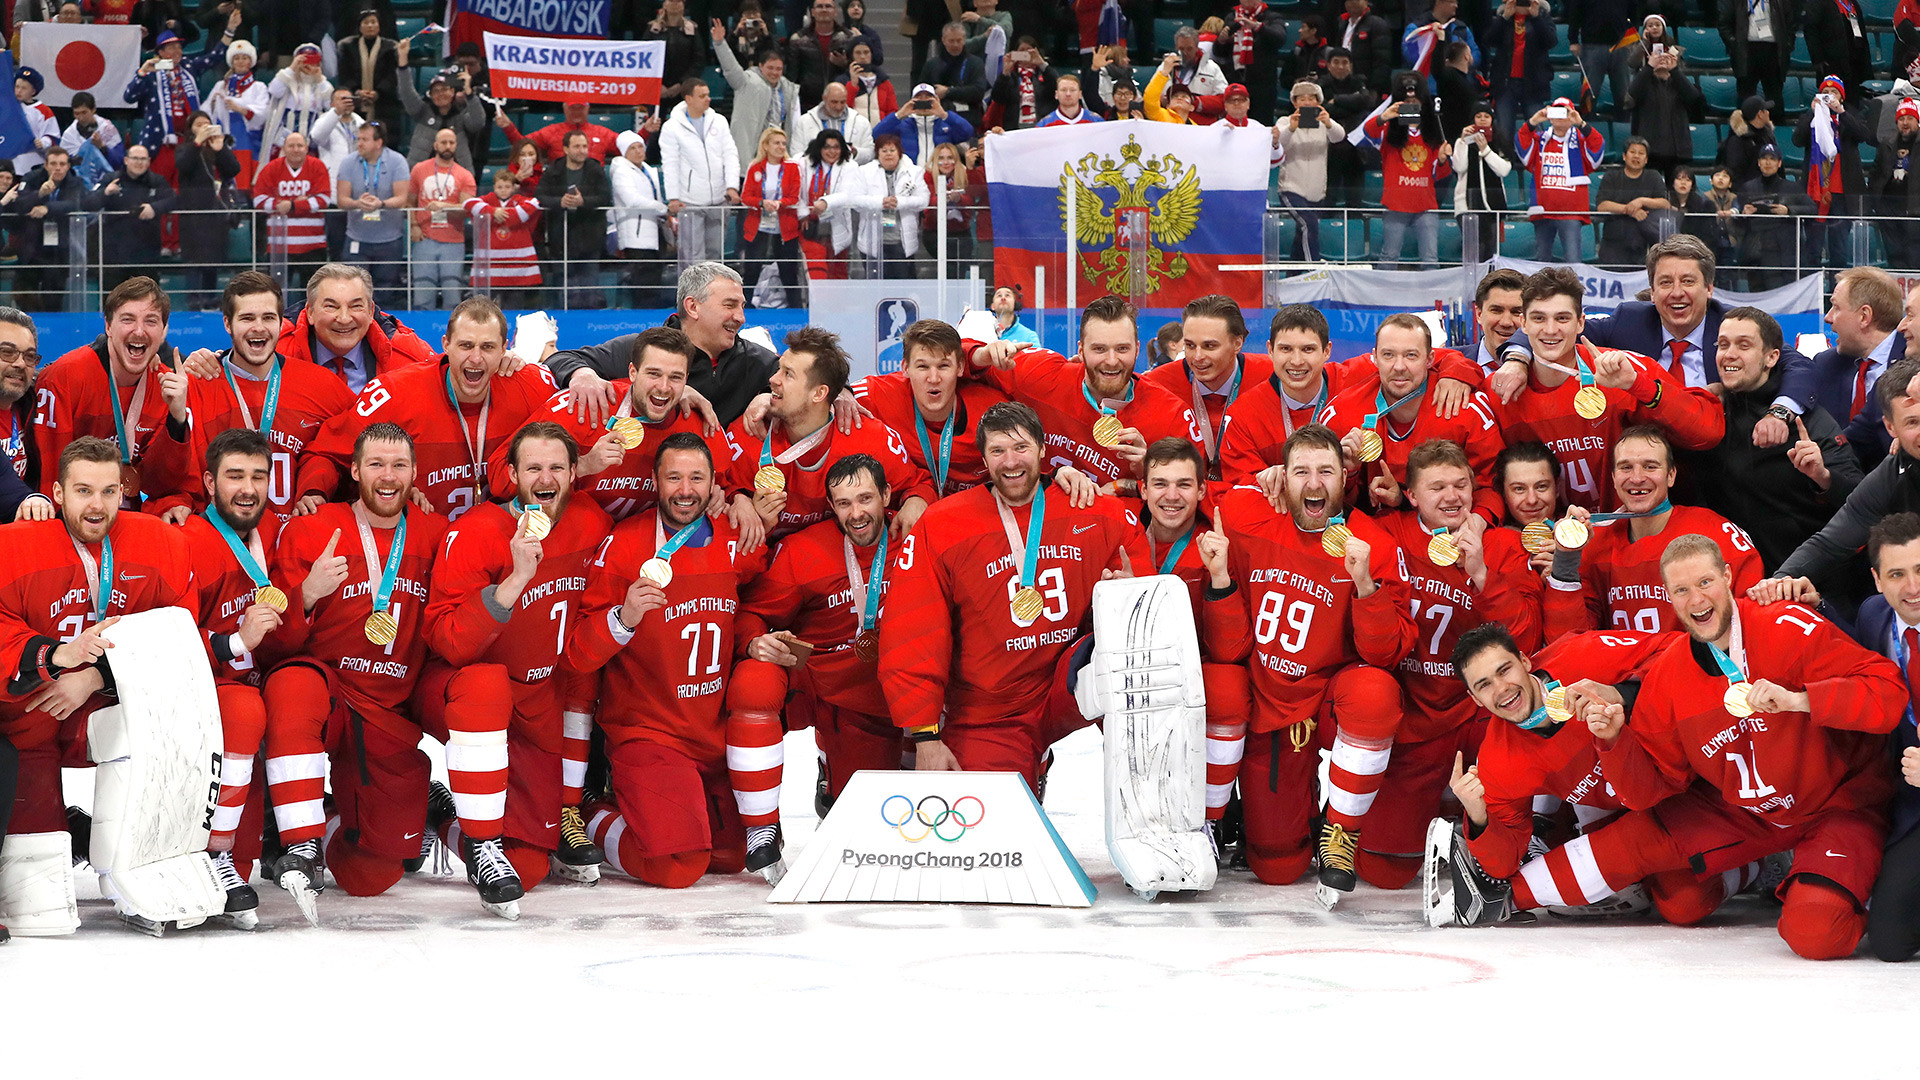 Men ice hockey team from Russia